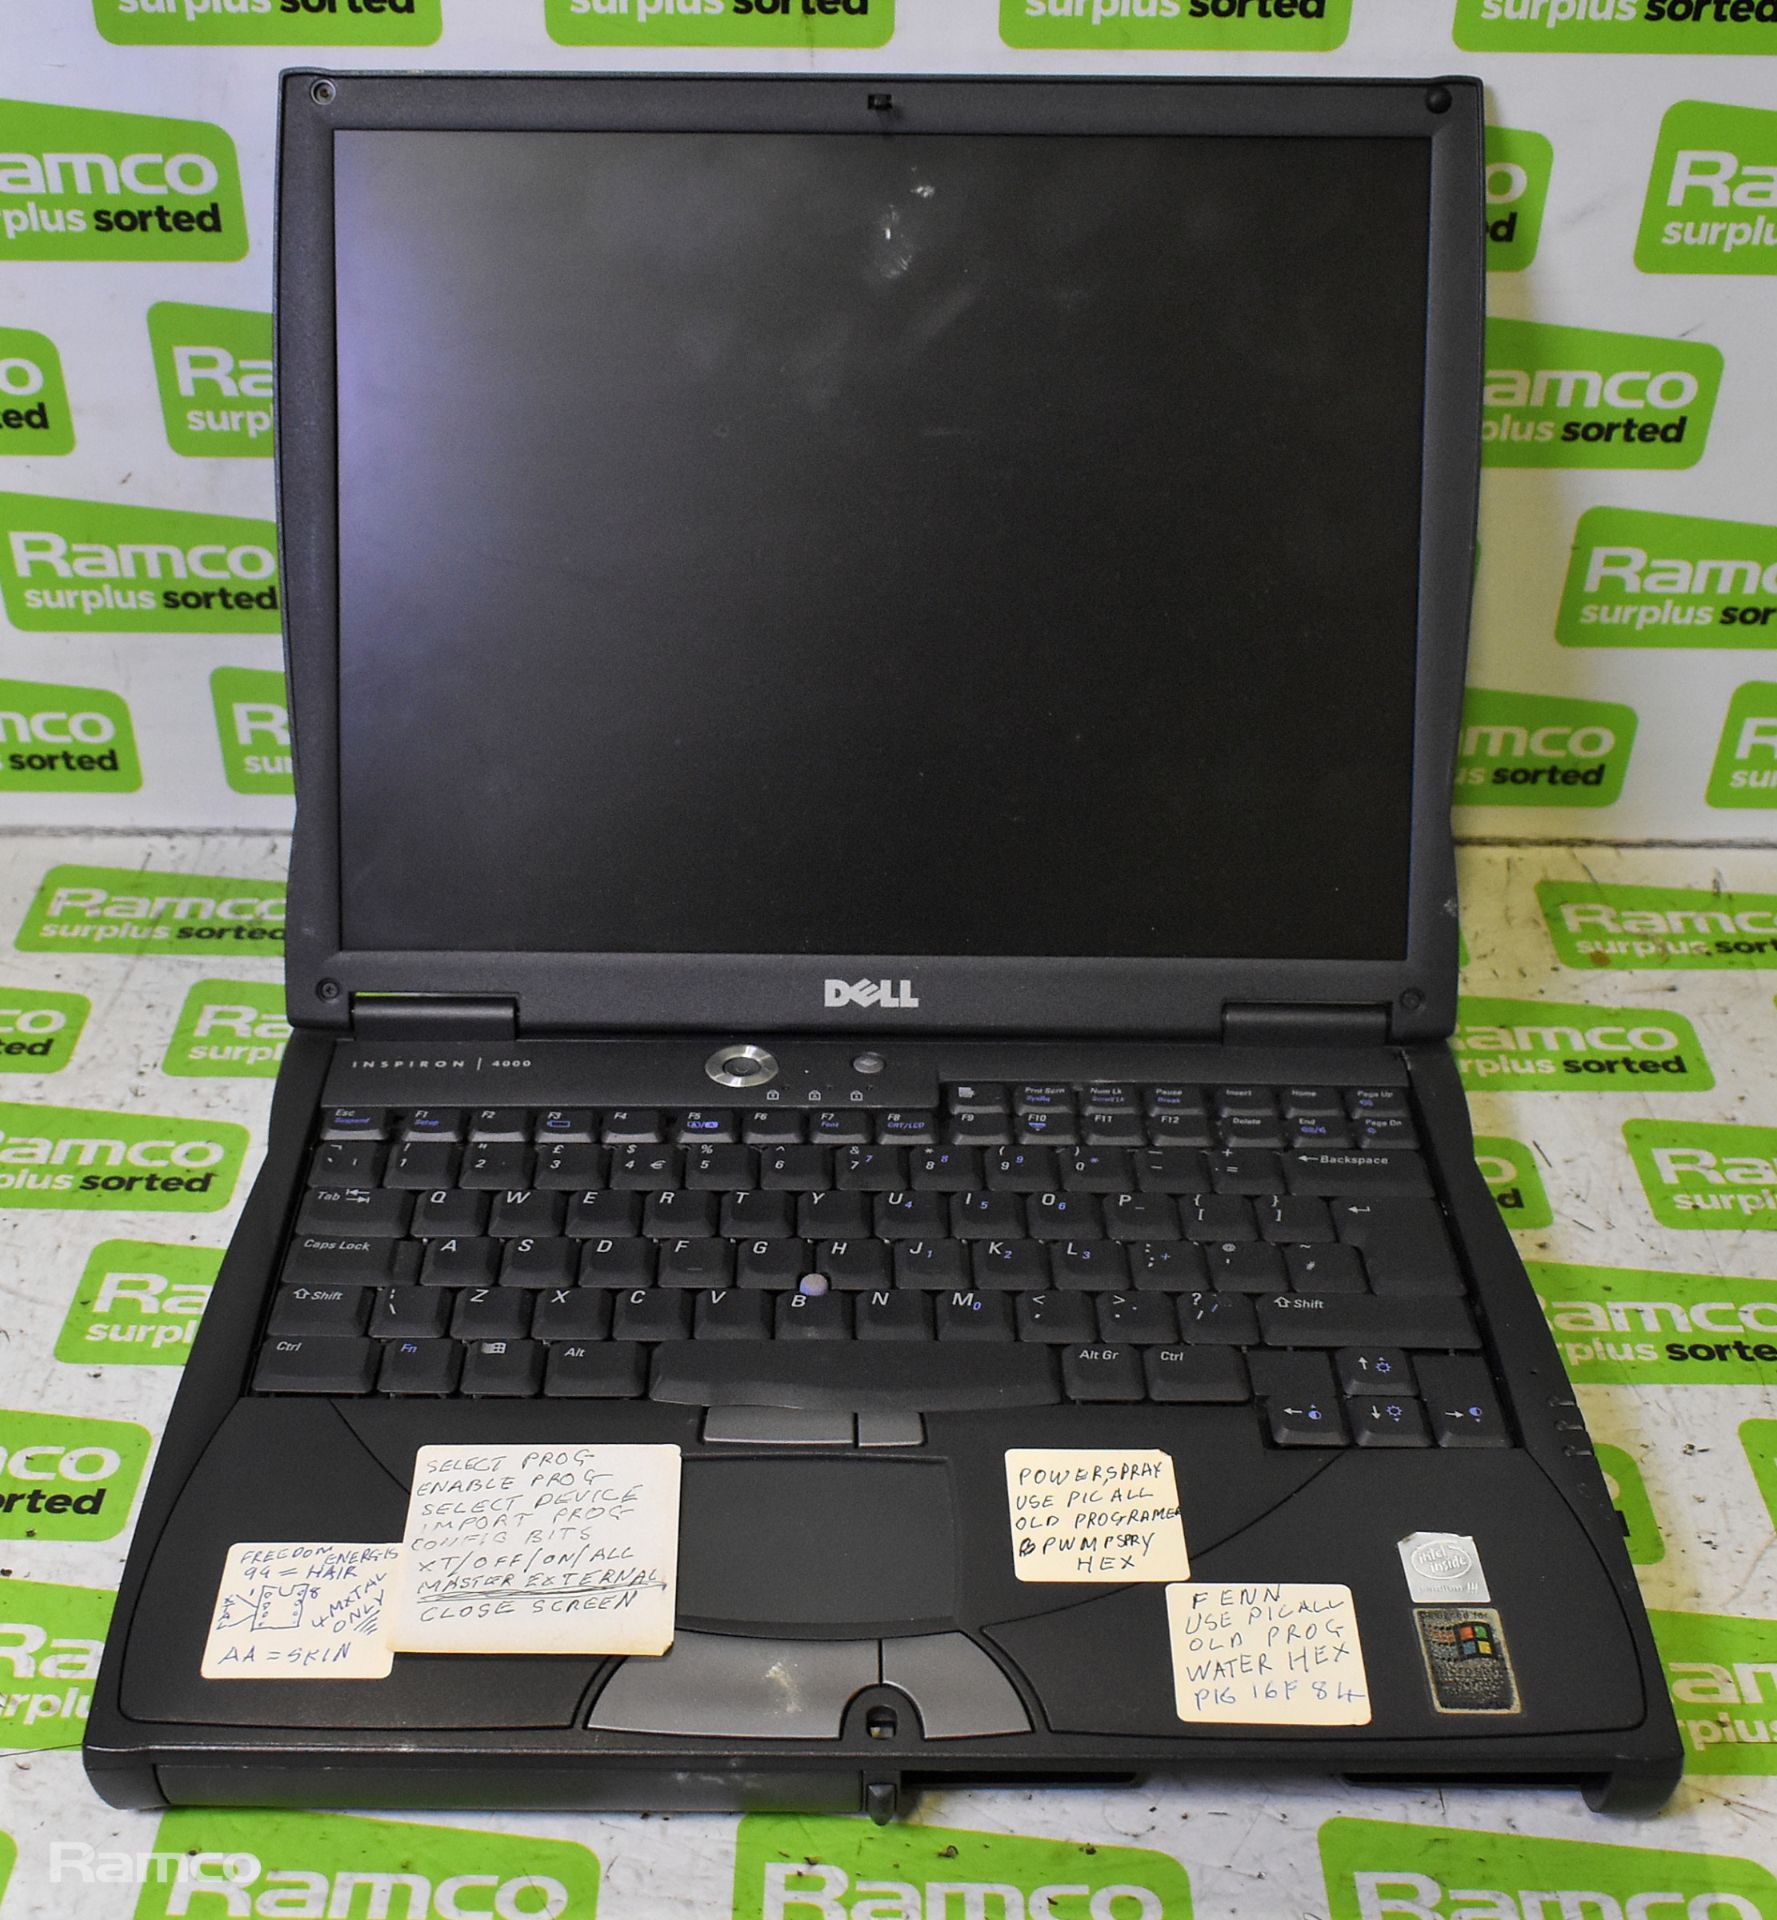 Siemens Esprimo mobile V5515 laptop, Dell PP02 laptop in carry case, Dell PP01L laptop in carry case - Image 18 of 22